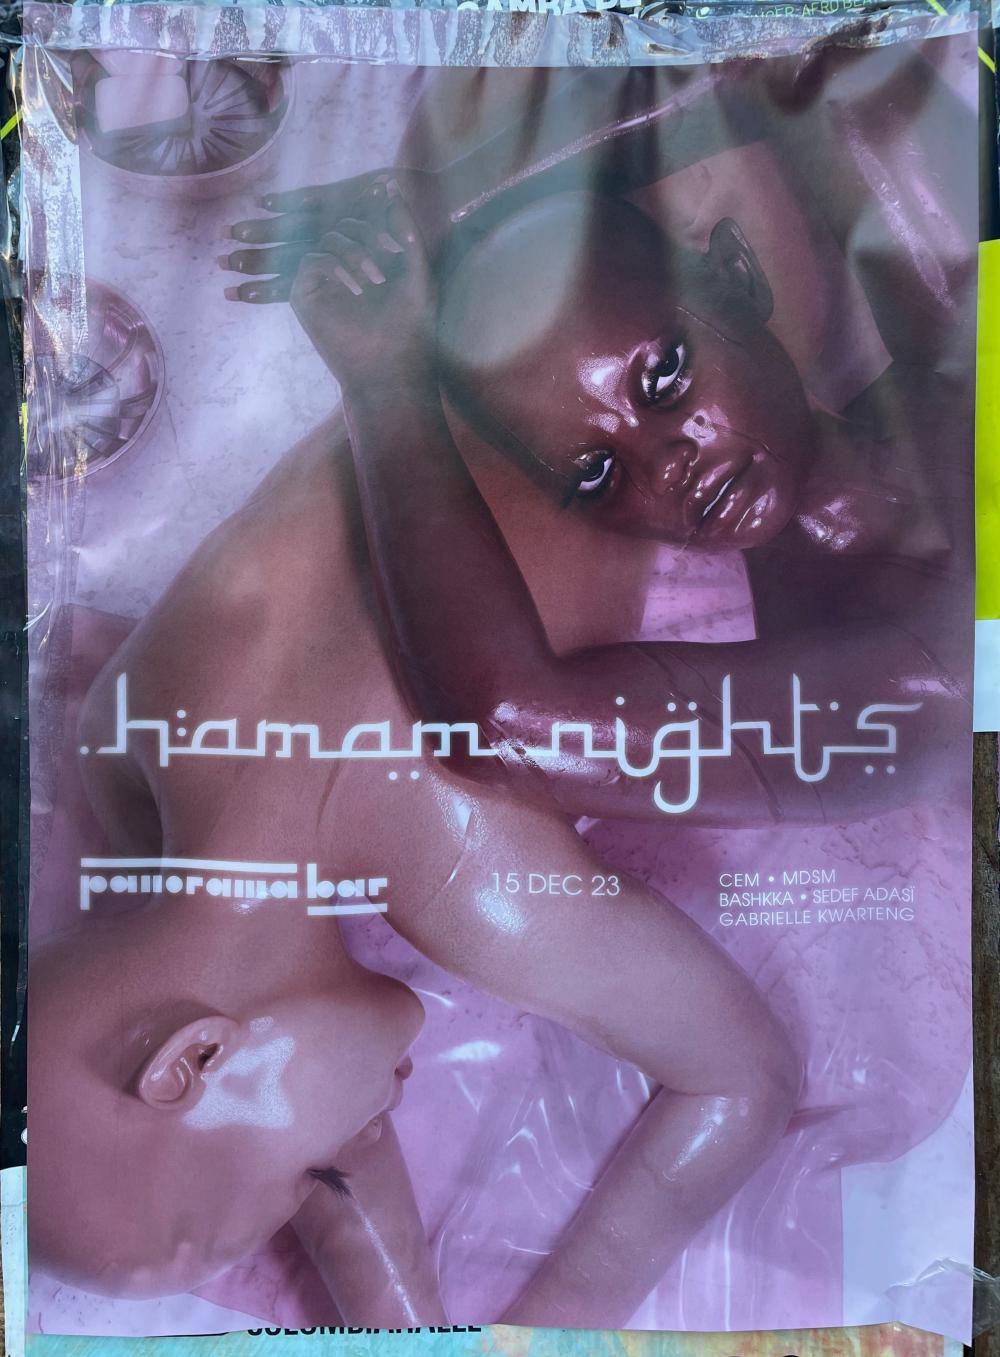 Hamam Nights at Panorama Bar. Hyperreal glossy Barbie dolls.